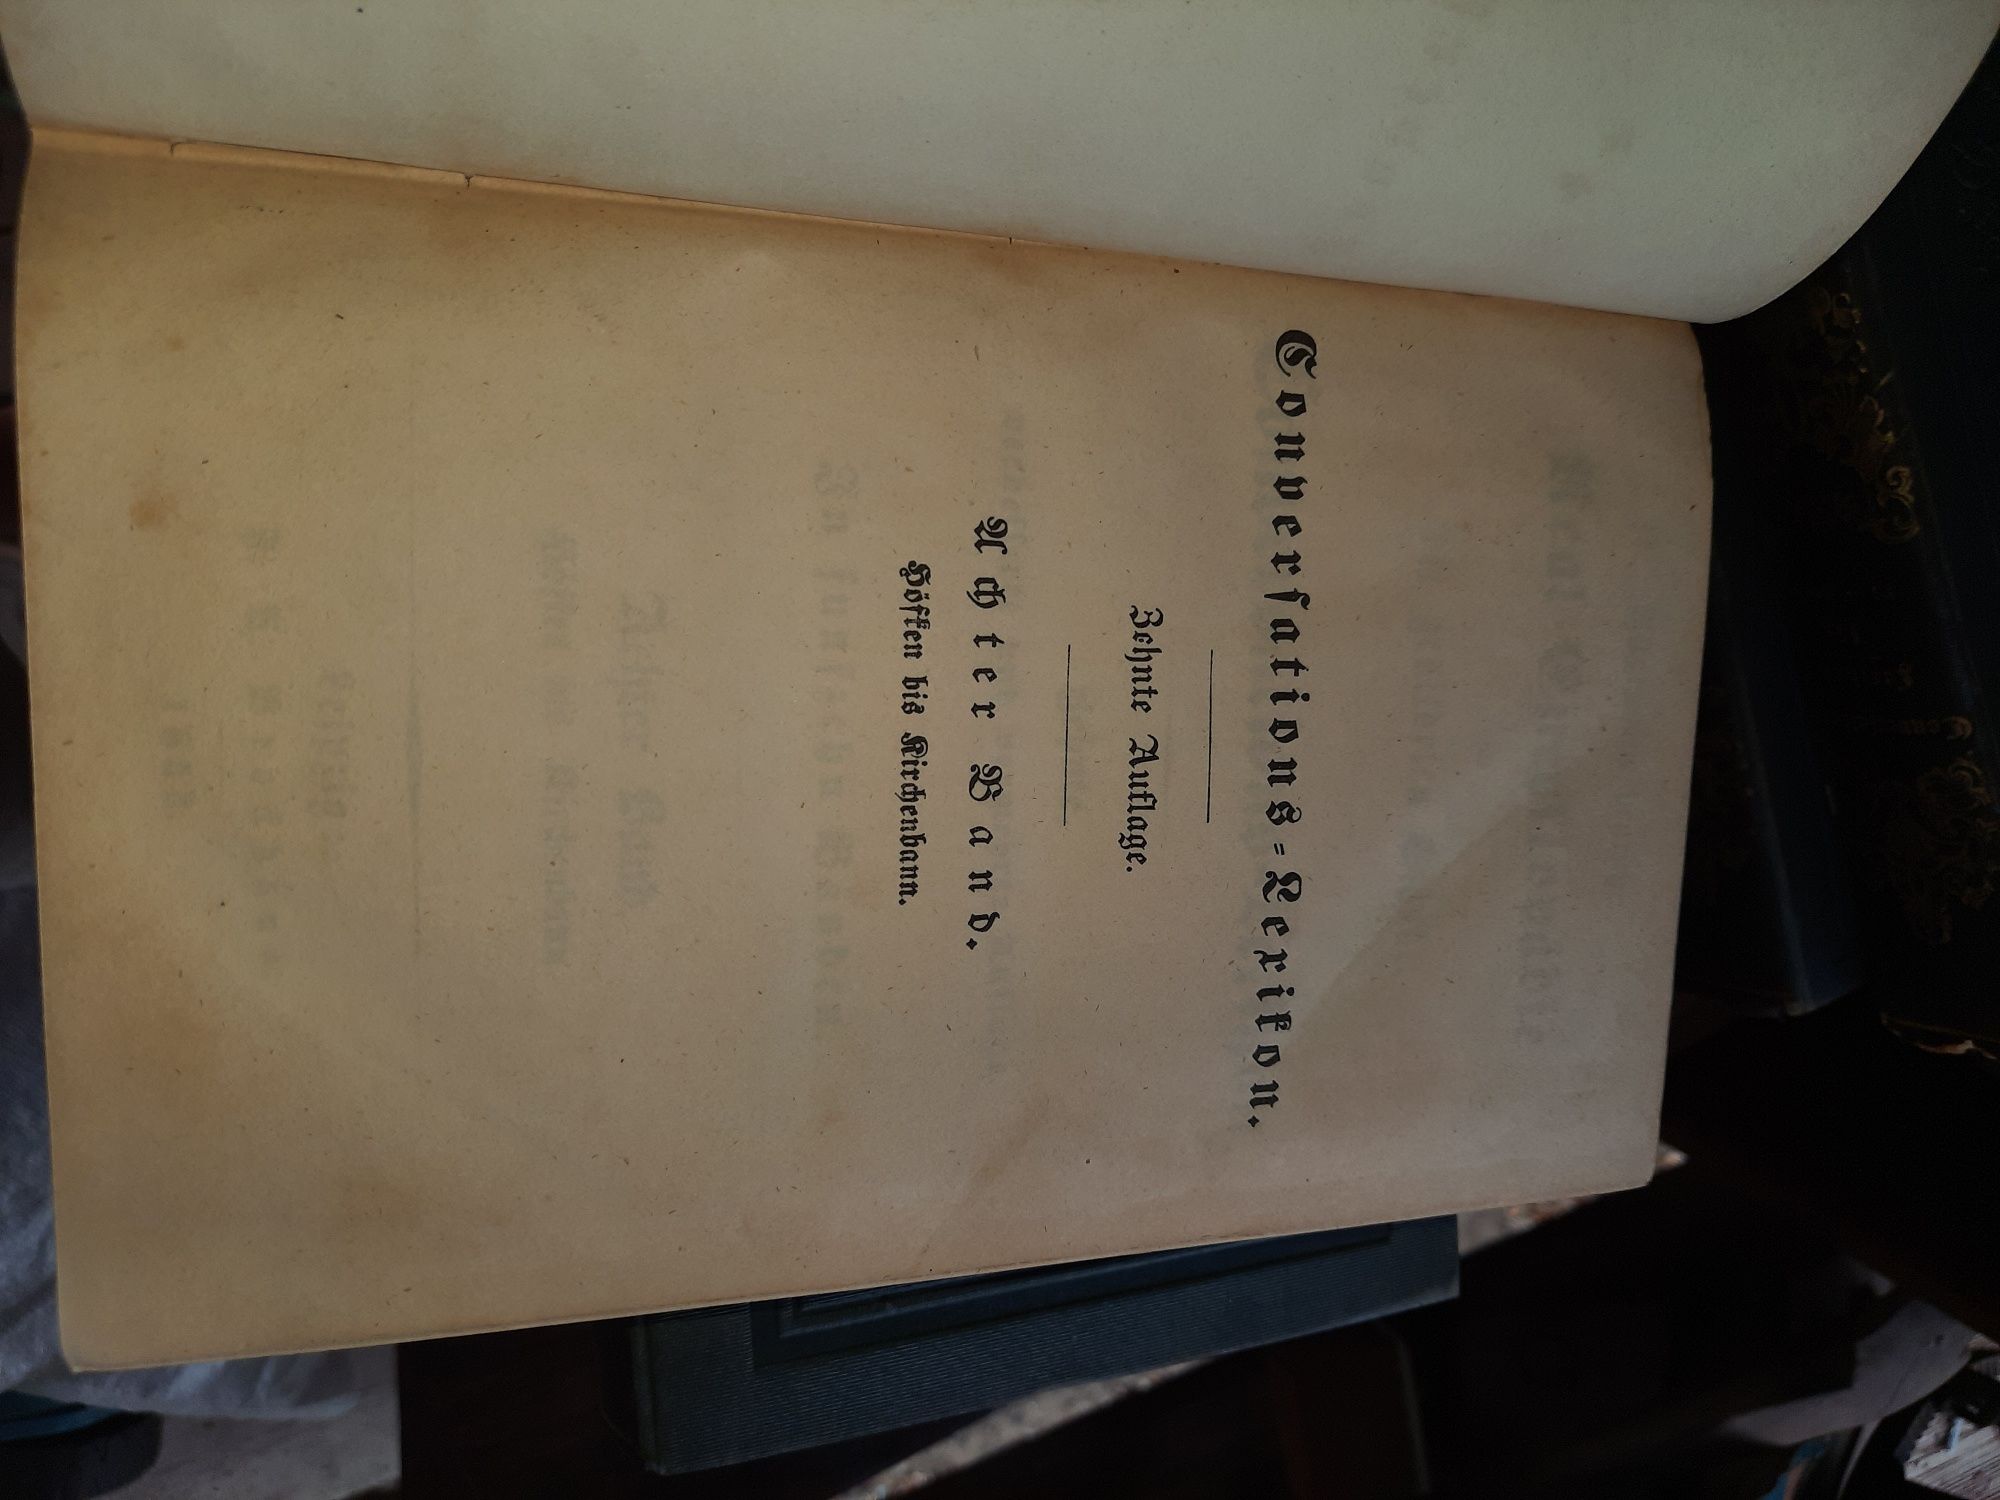 15 volume 1853,conversation lexikon